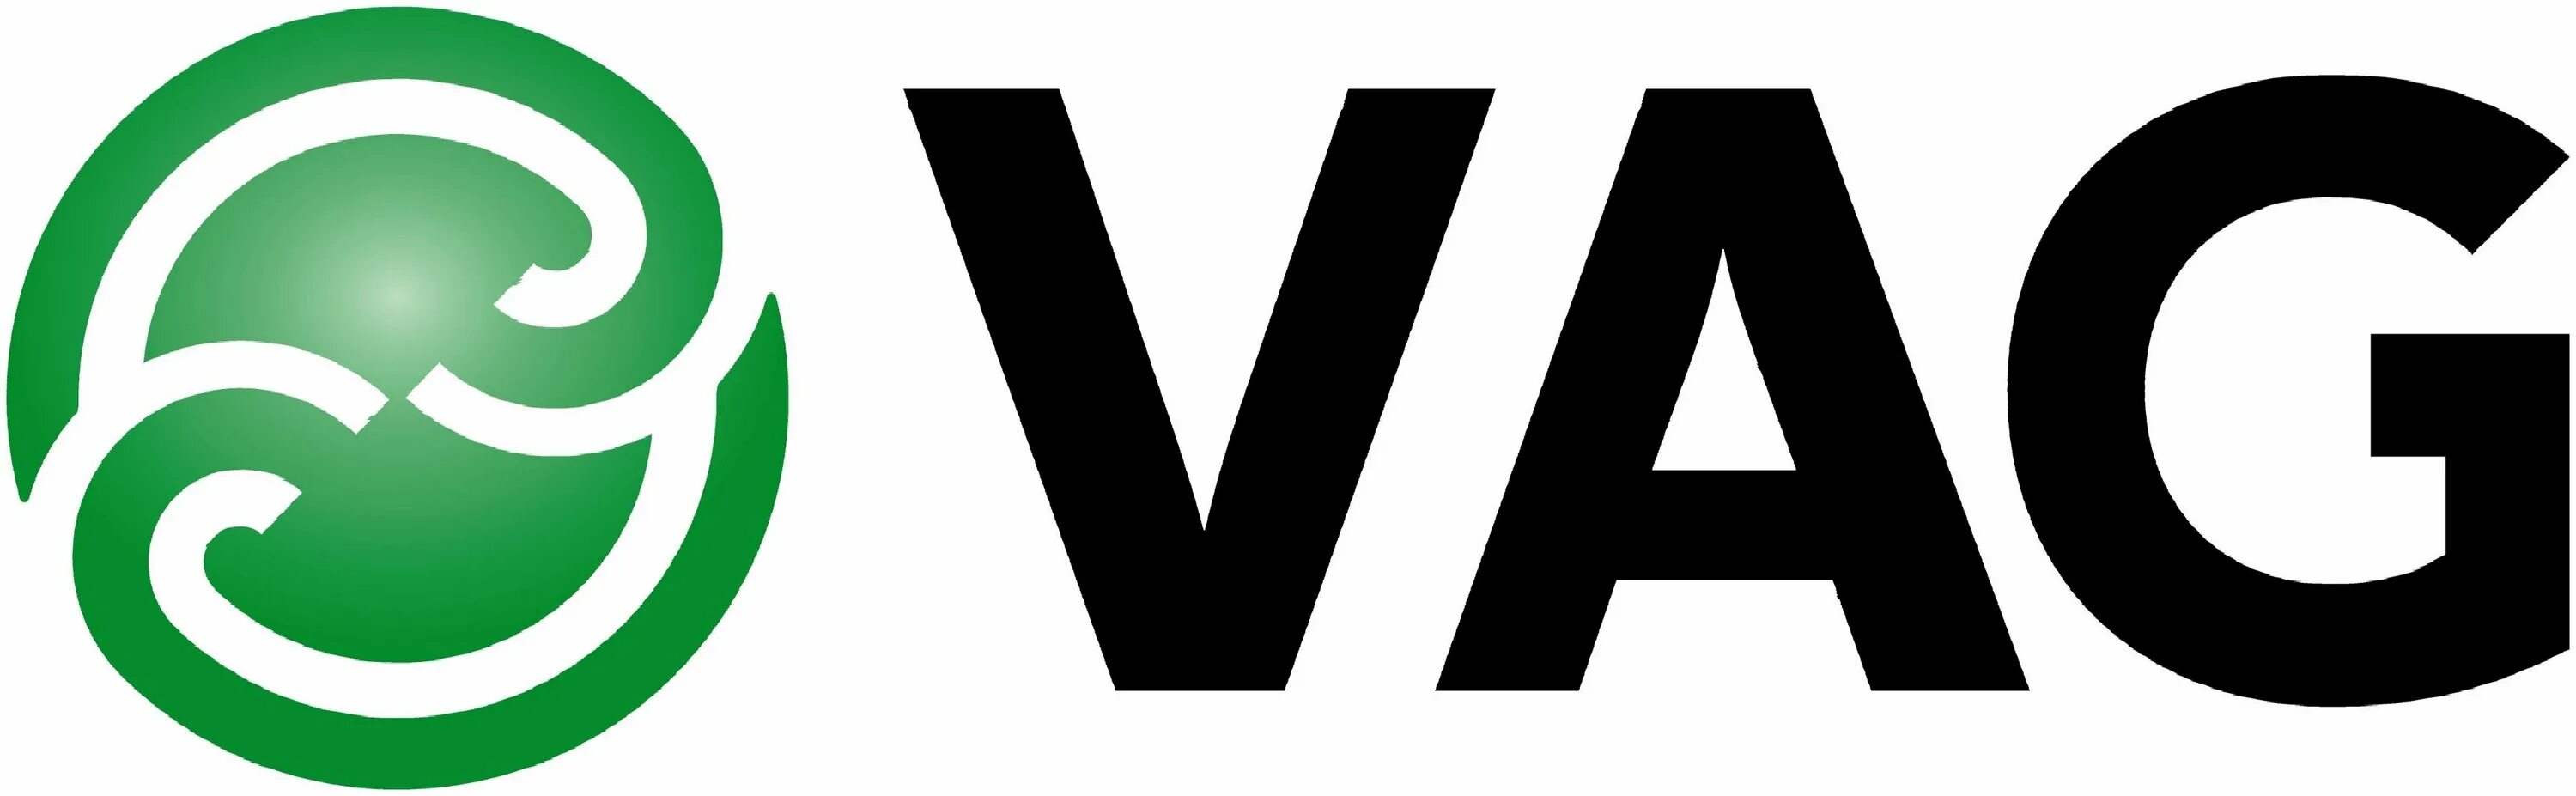 Ооо в е г. VAG логотип. Значки VAG Group. Логотип арматуры VAG. Фирмы концерна VAG.